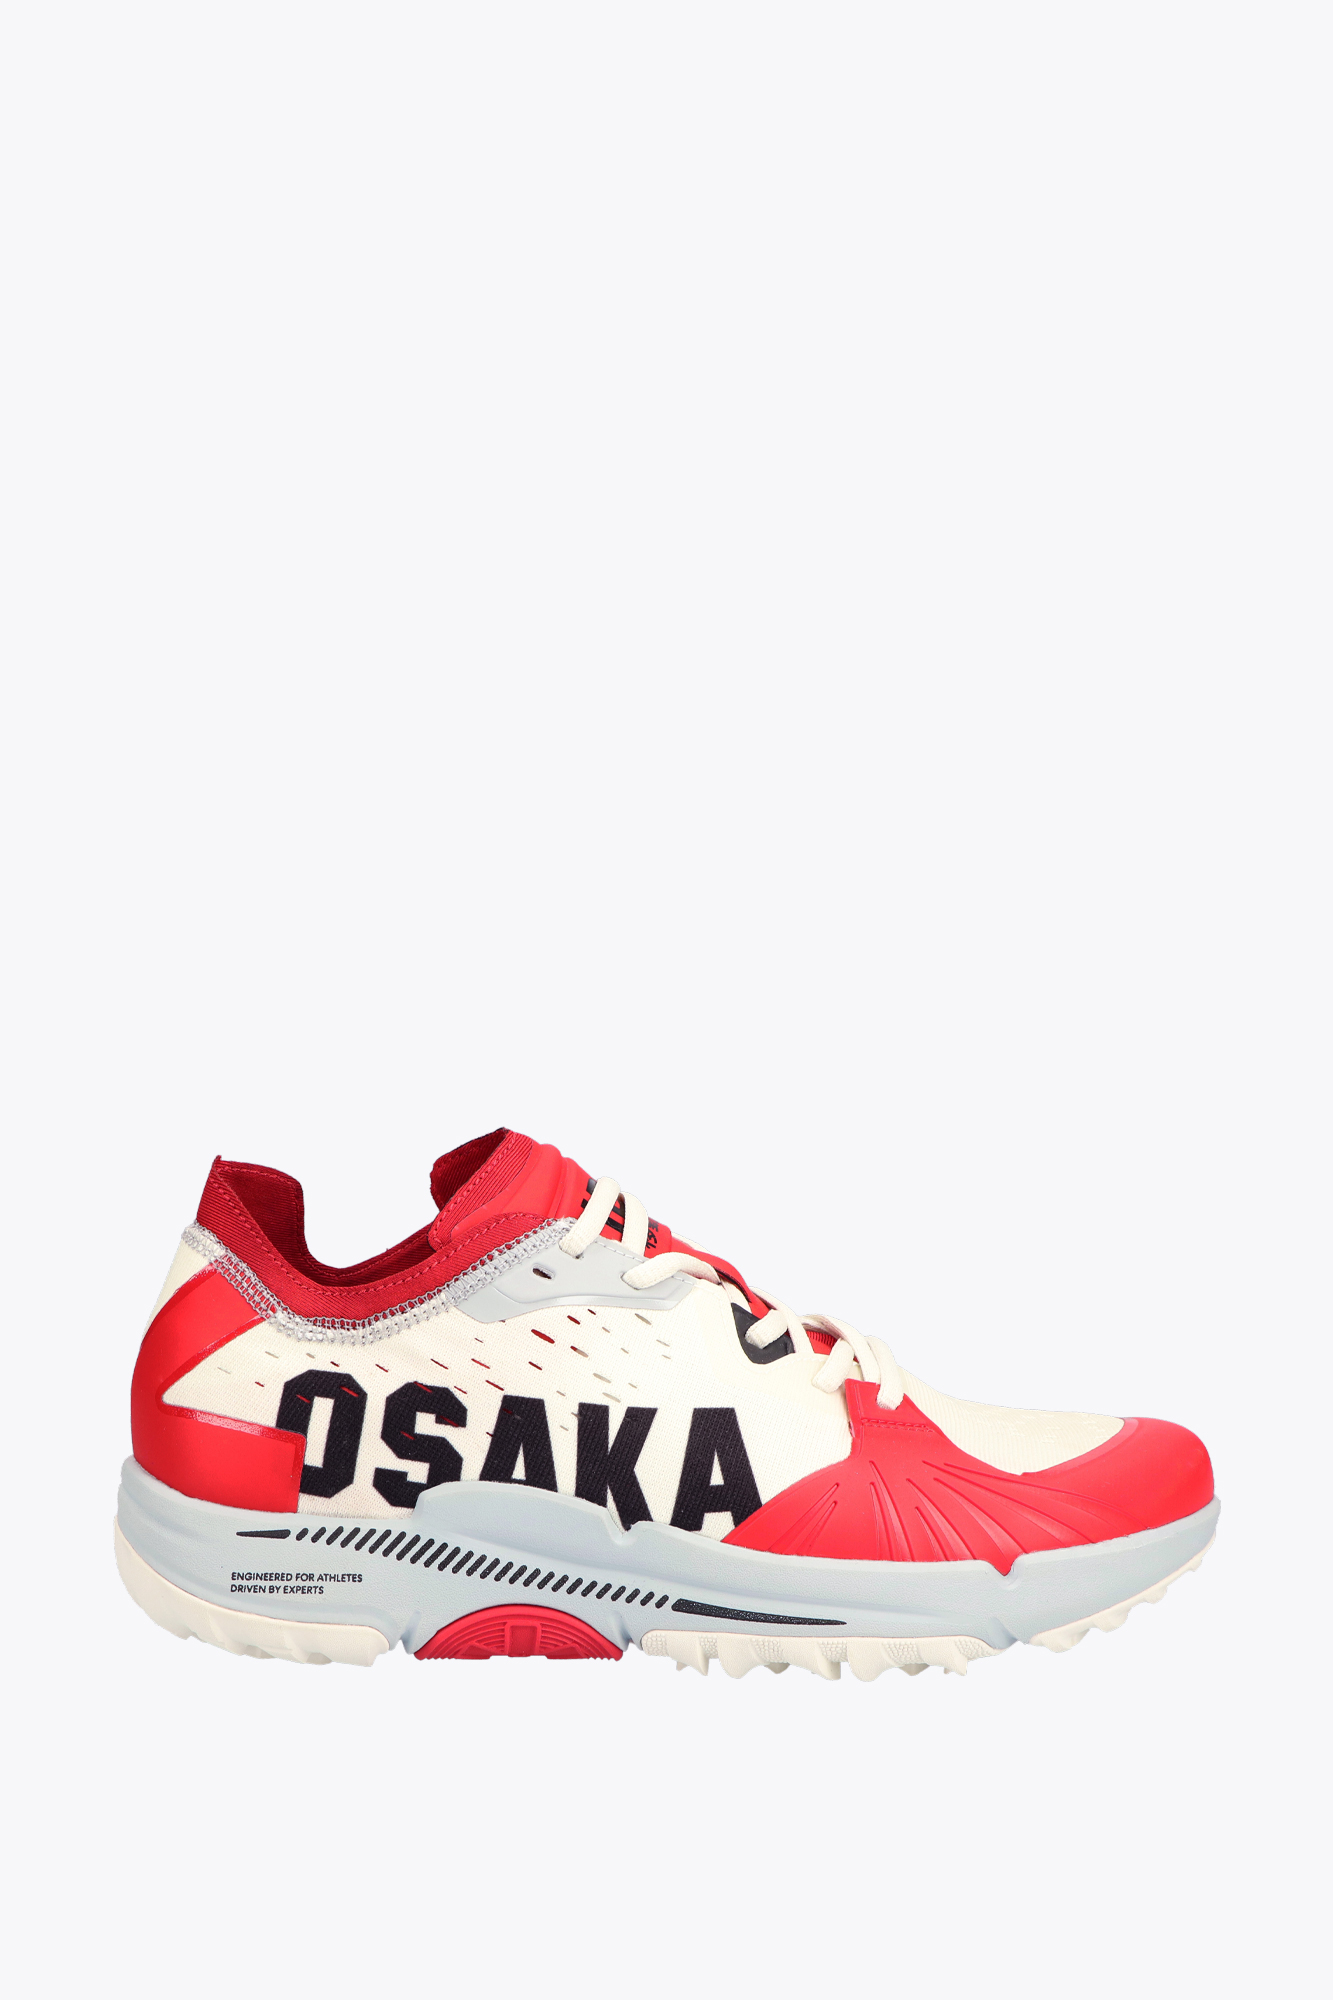 2020/21 Free & Fast Delivery Osaka IDO MK1 Standard Hockey Shoes